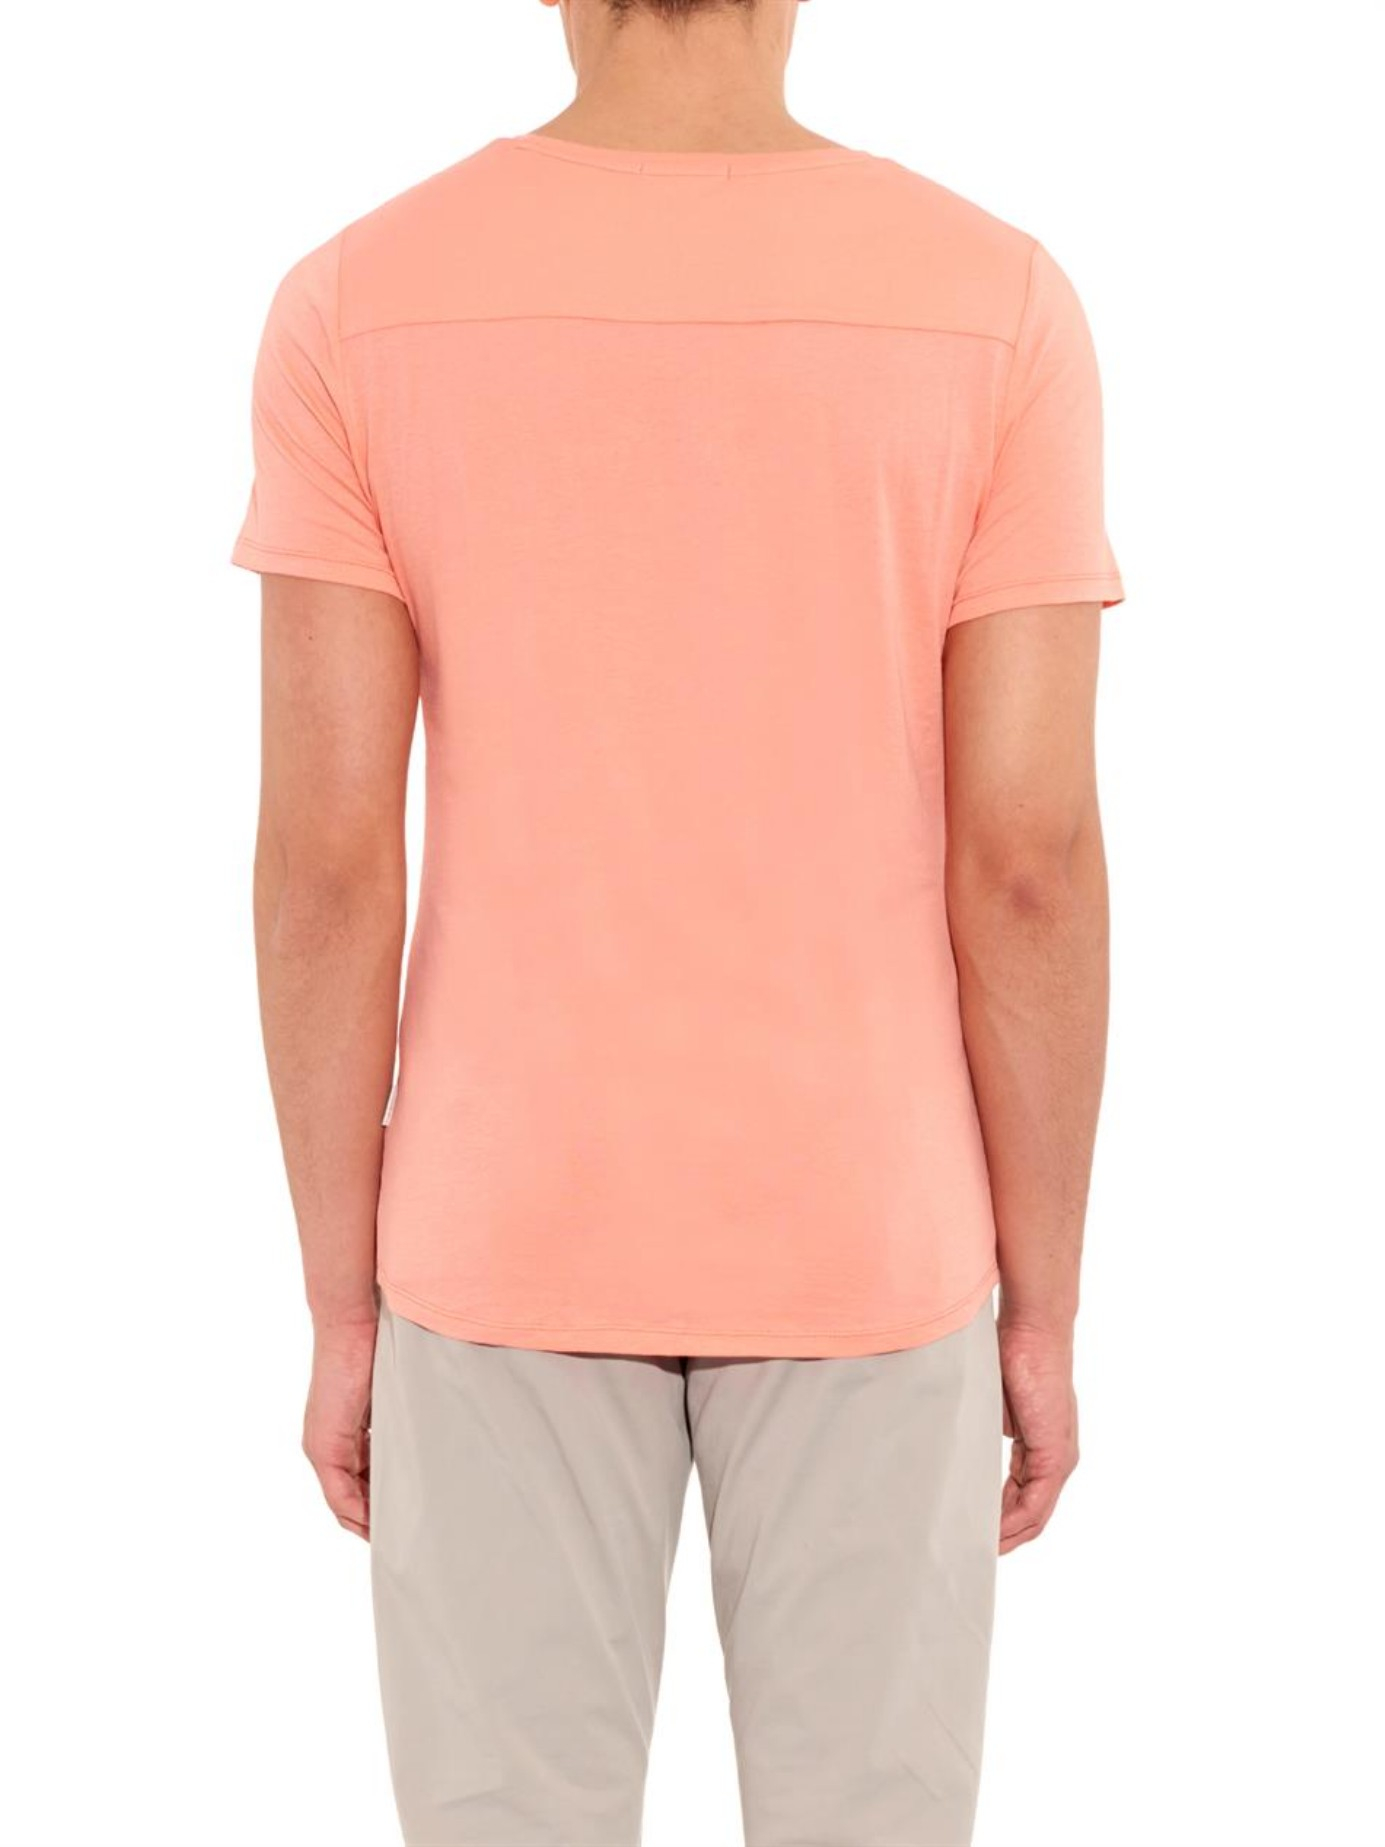 Lyst - Onia Joey Pocket T-Shirt in Orange for Men